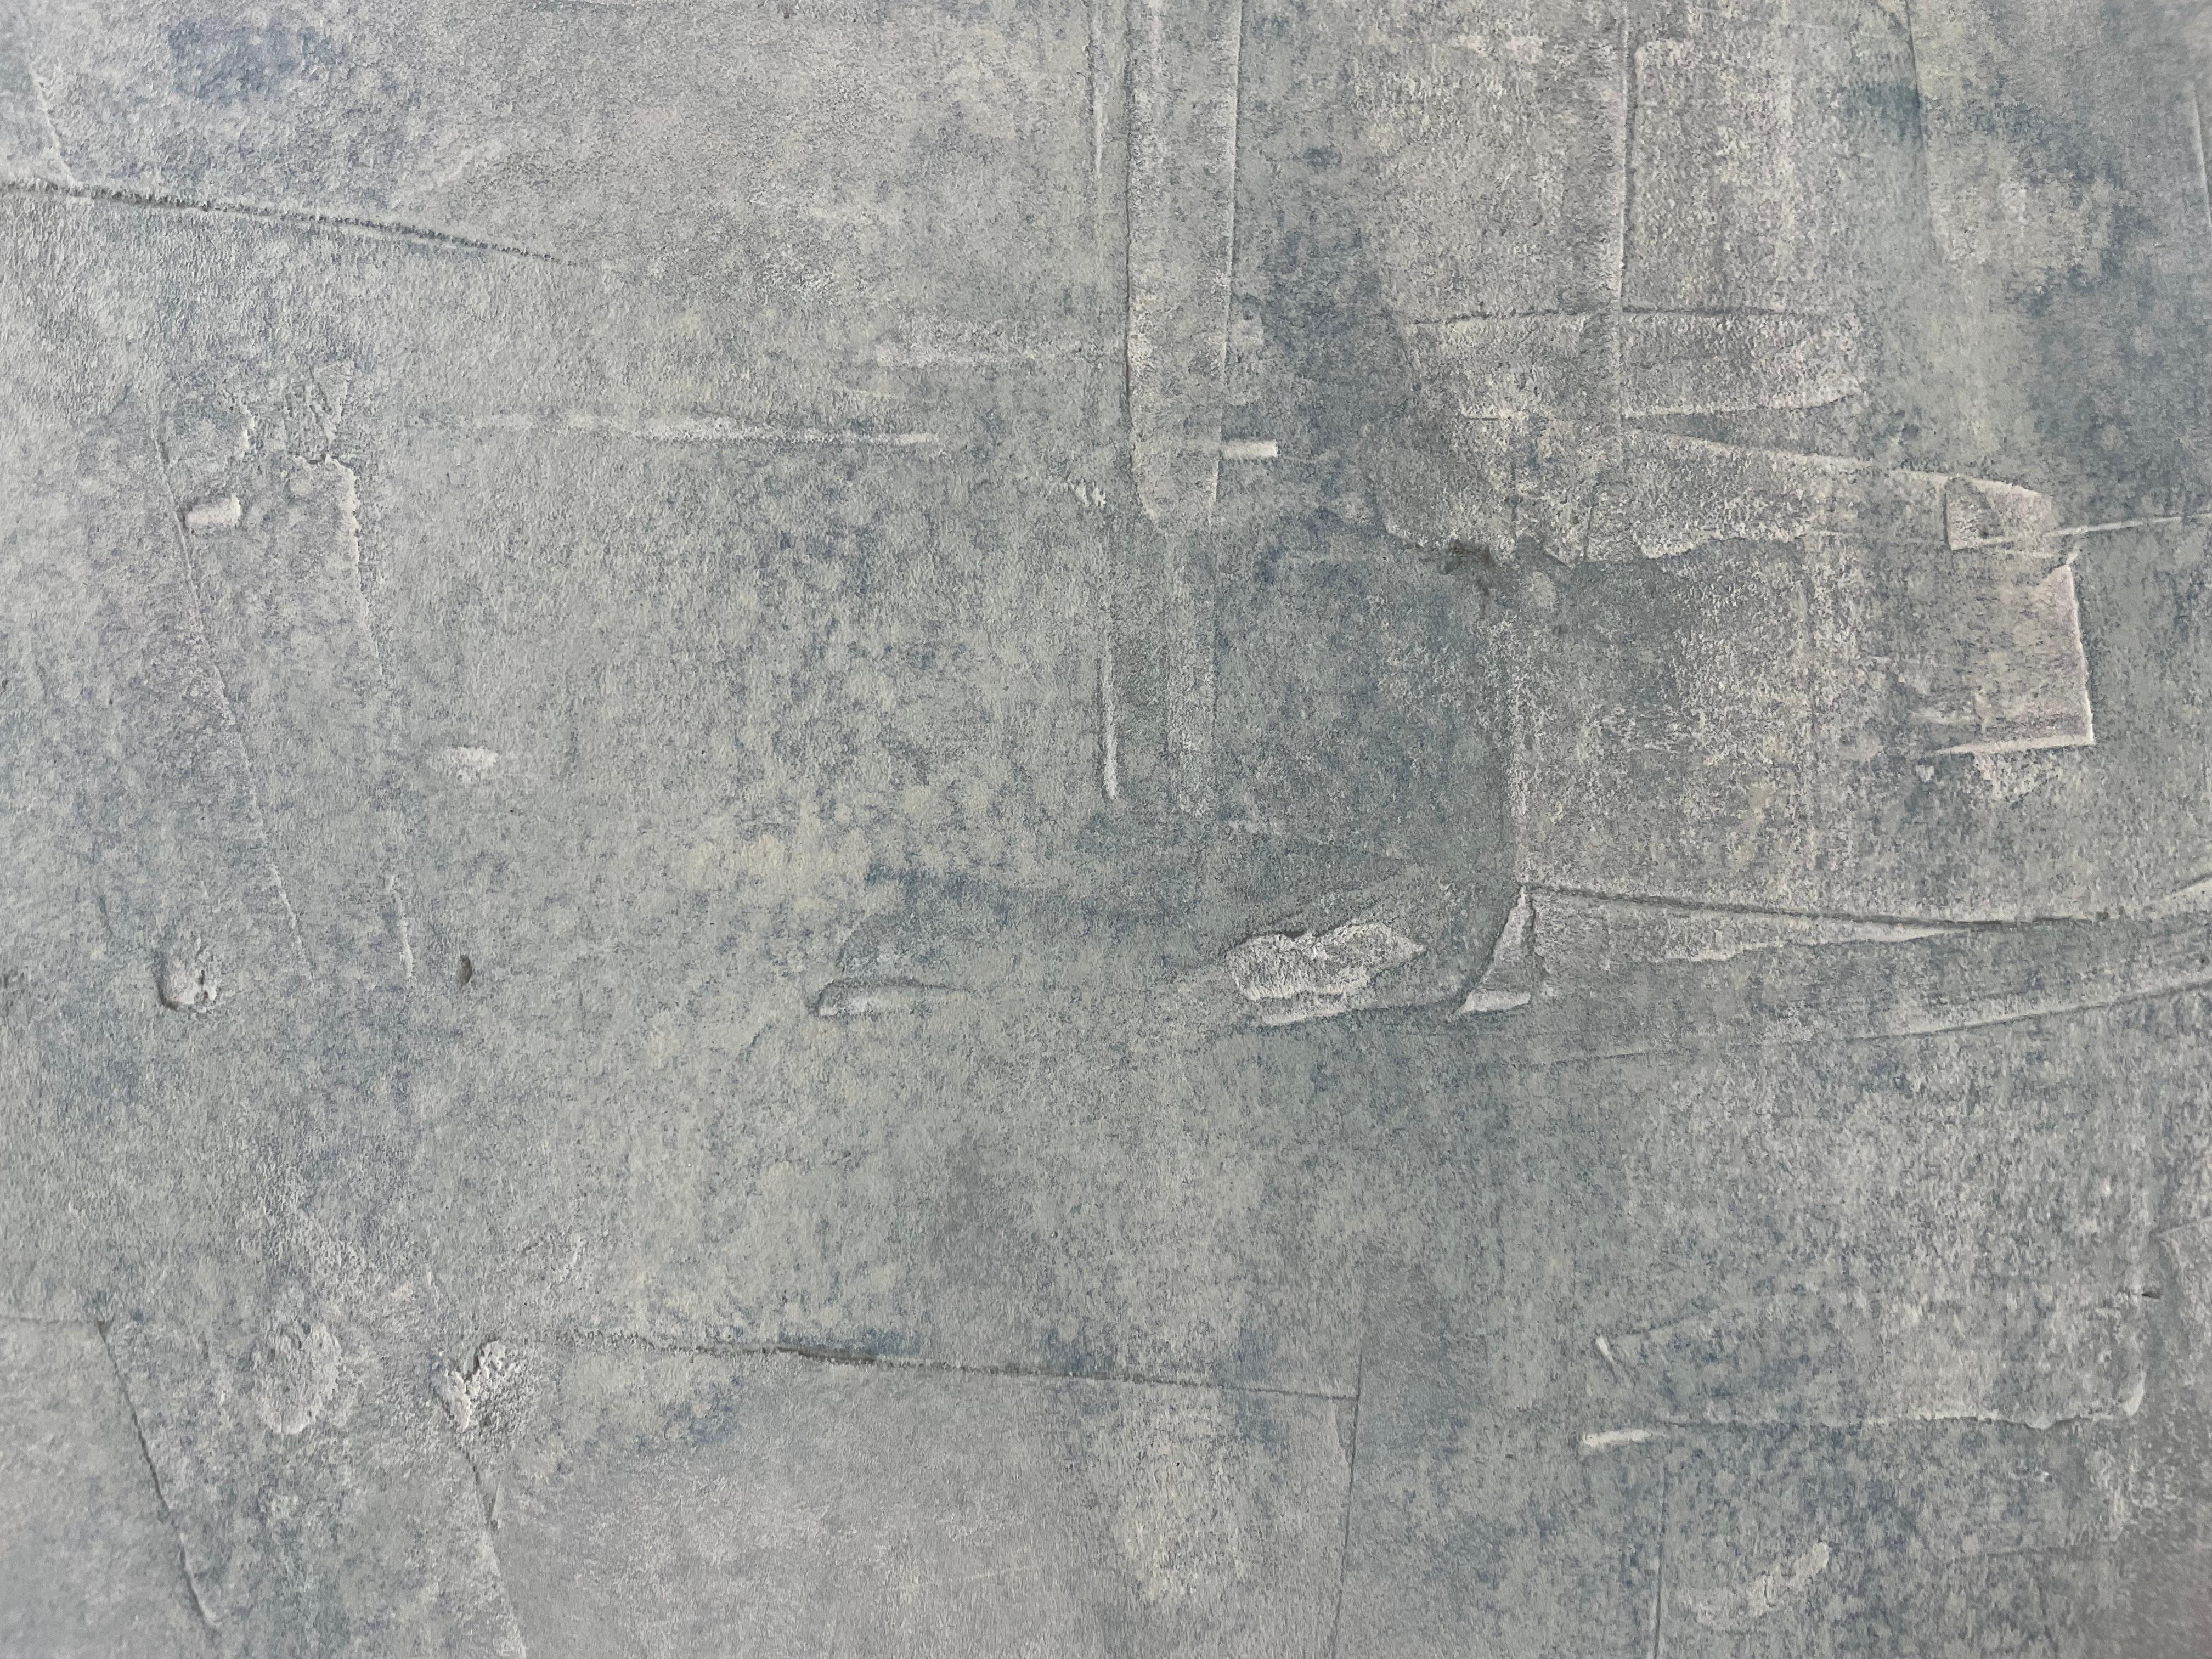 Balanceig – 21. Jahrhundert, Abstrakte Kunst, Zement auf Holz, Erdtöne (Grau), Abstract Painting, von Núria Guinovart